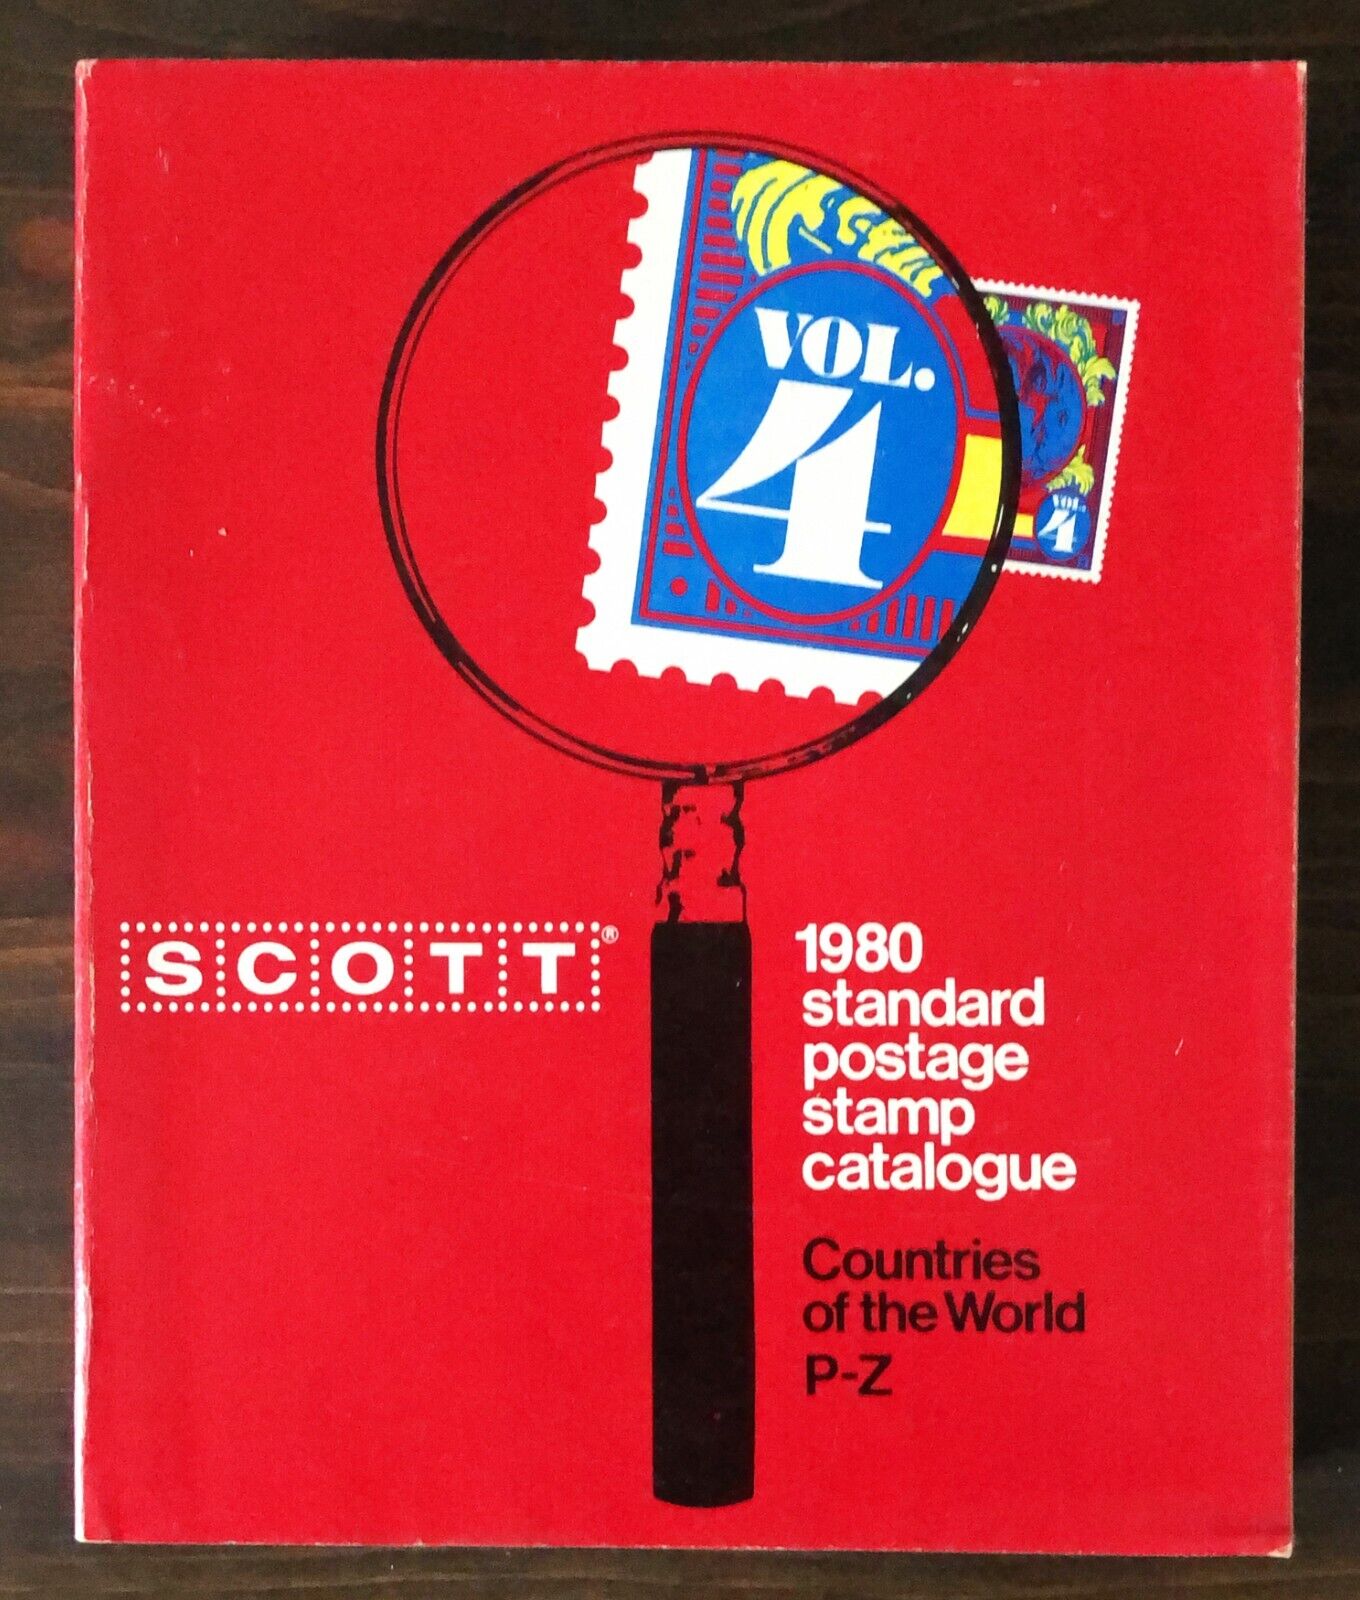 Scott Standard Postage Stamp Catalogue 1980 Vol 4